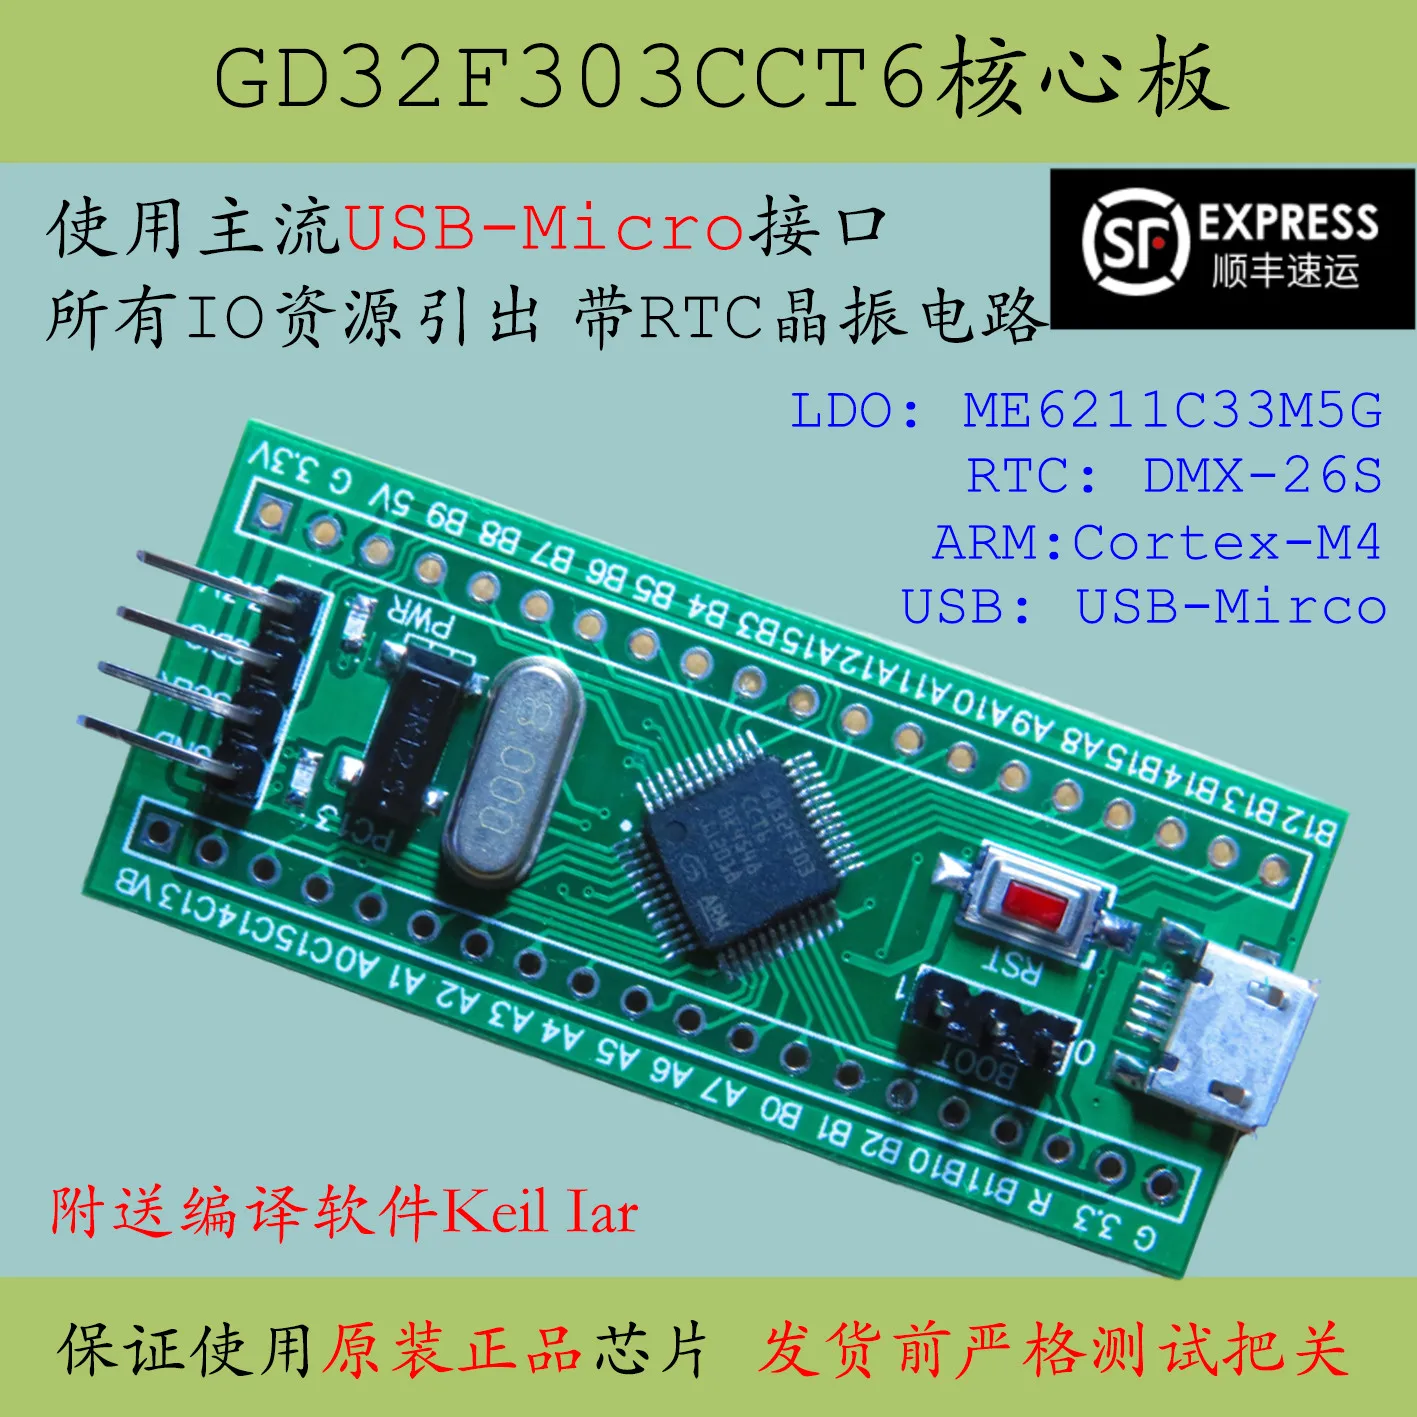 

Gd32f303cc6 core board replaces STM32 evaluation gd32f303 minimum system cct6m4 development board